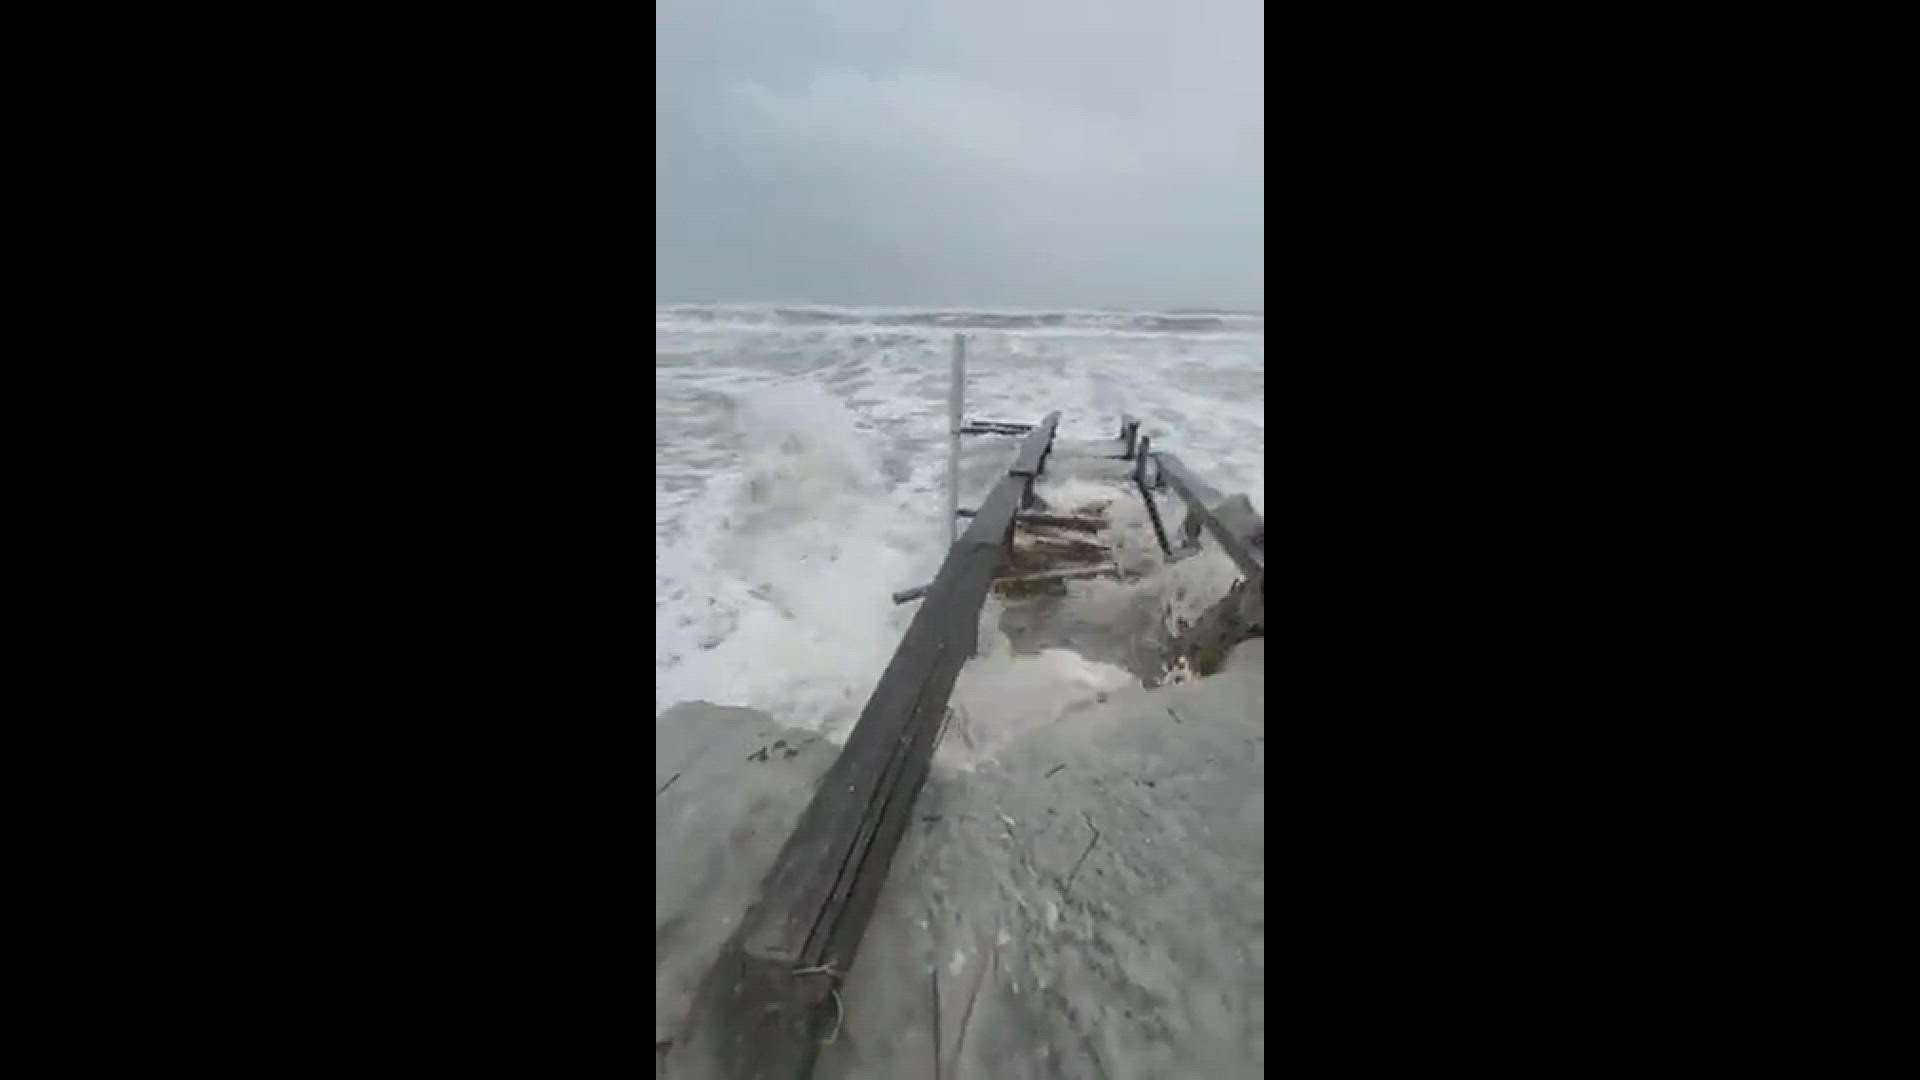 Storm surge in Jacksonville Beach
Credit: David Bew